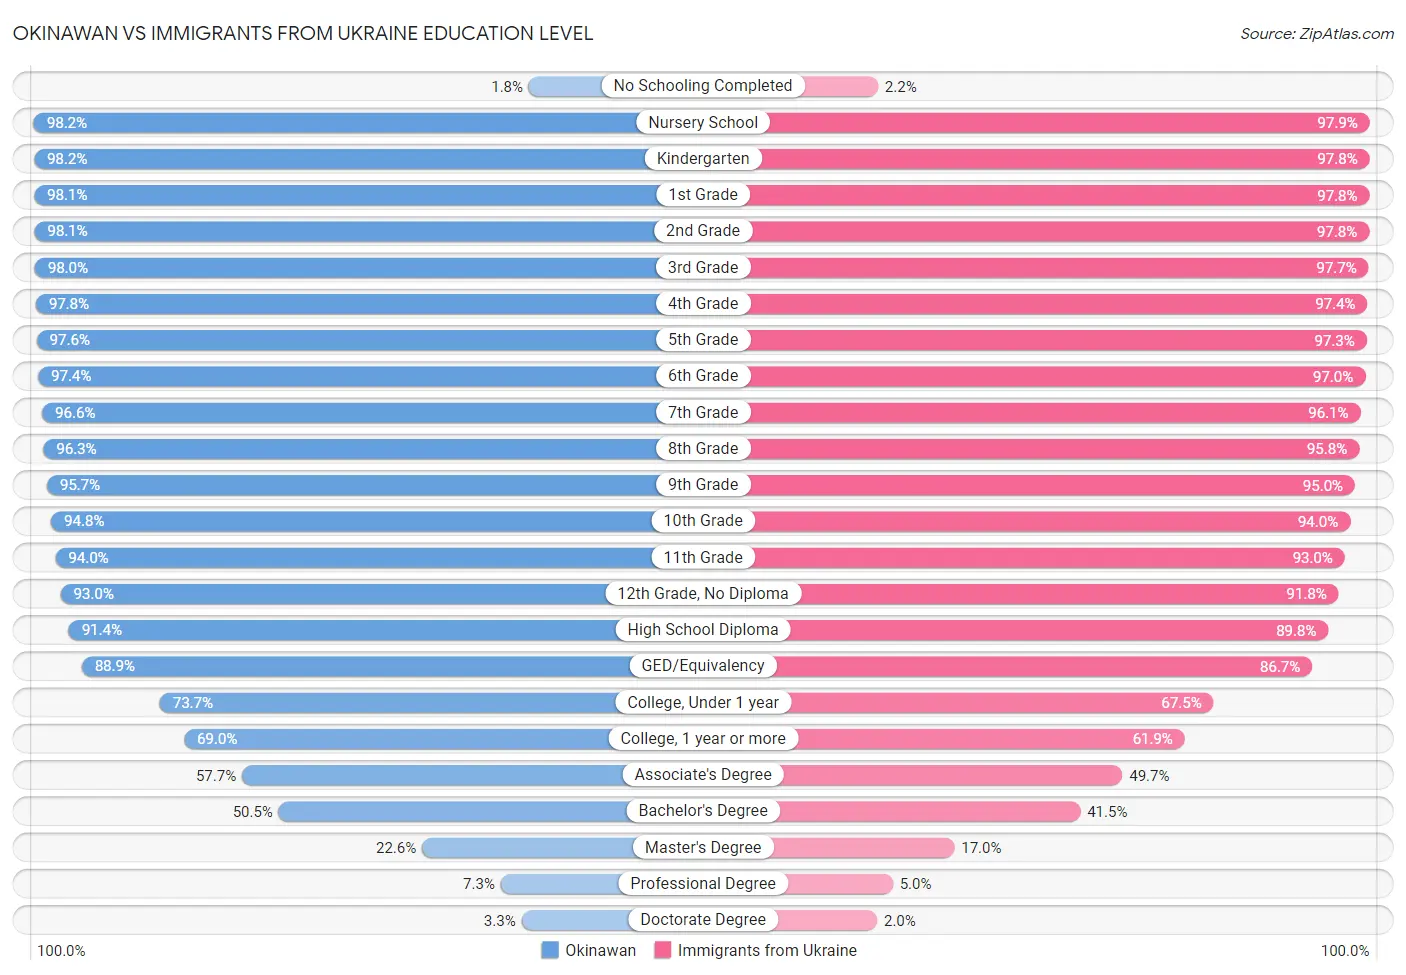 Okinawan vs Immigrants from Ukraine Education Level